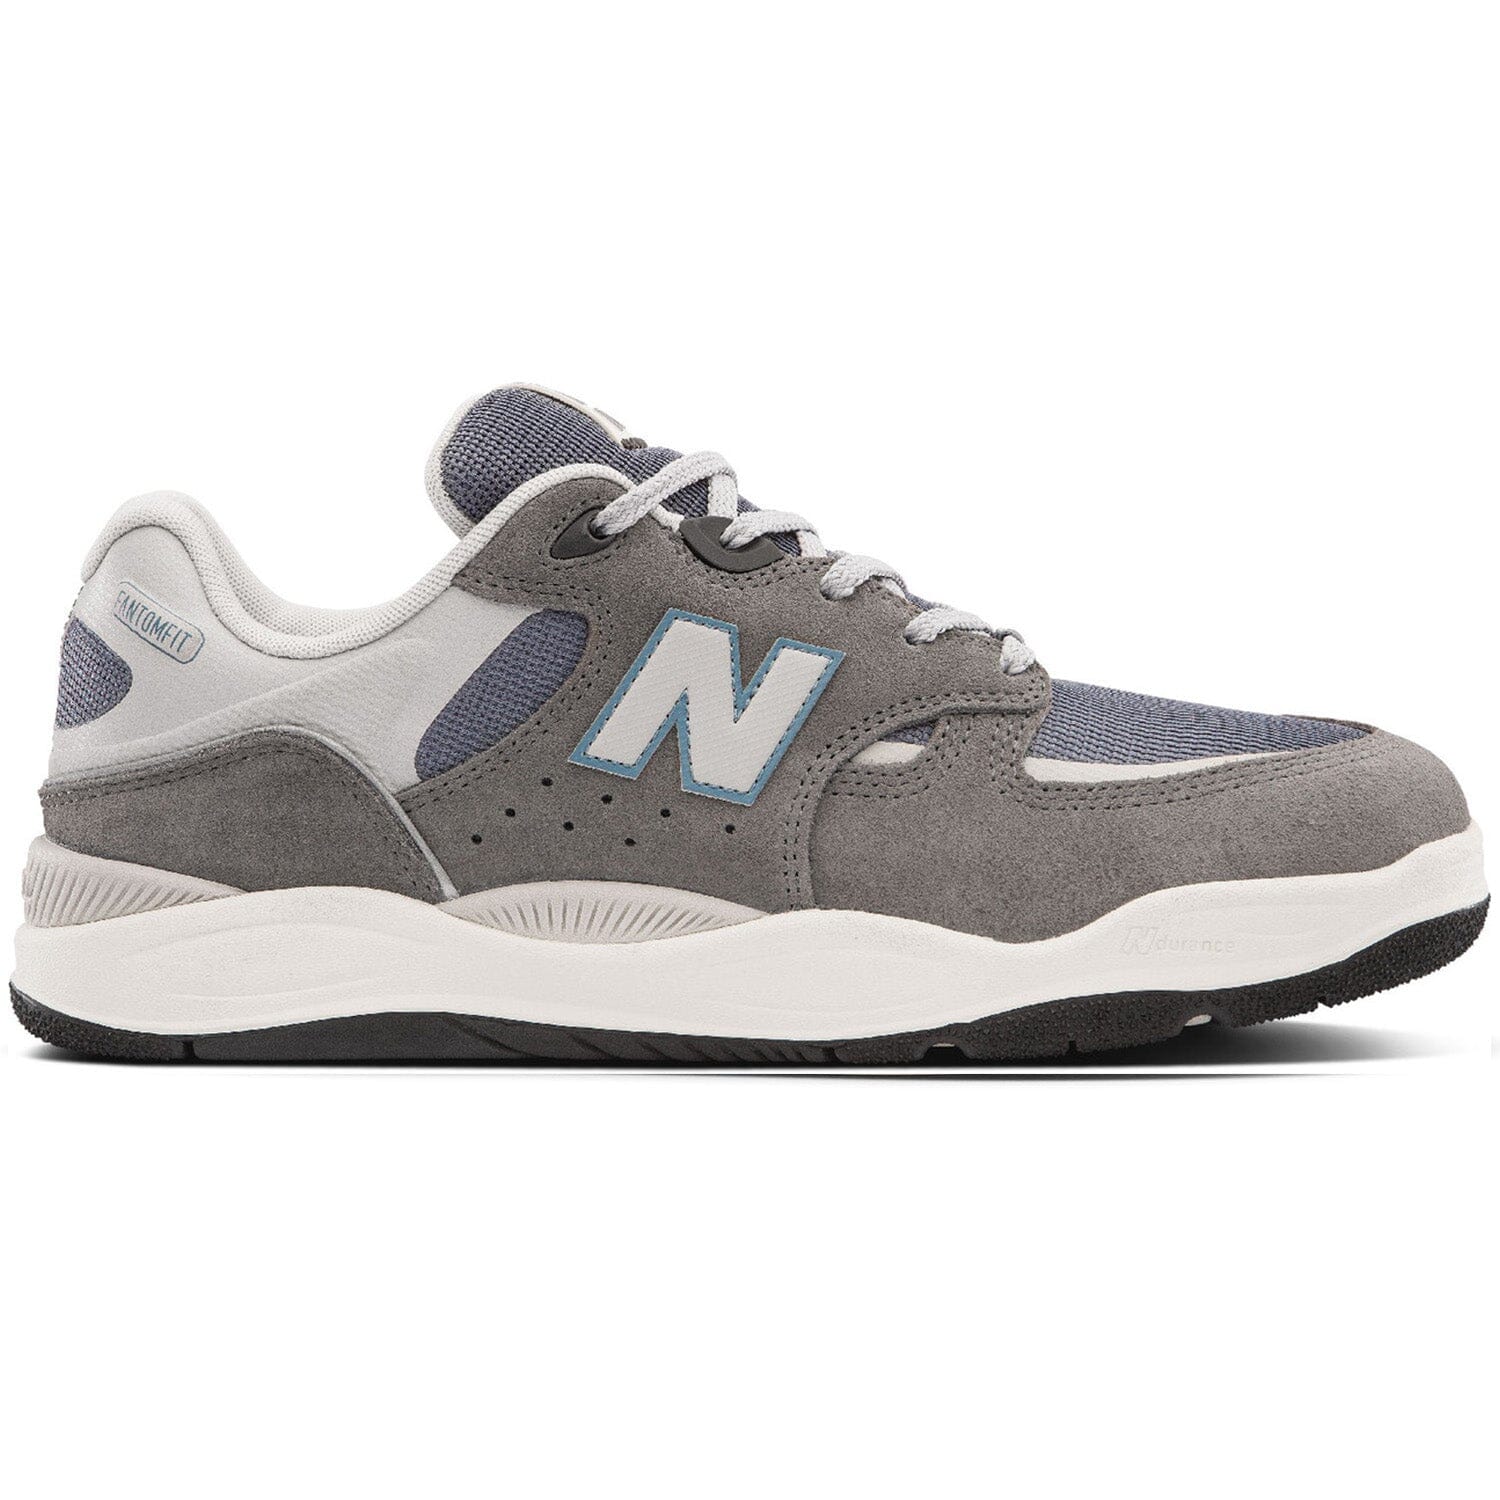 New Balance Numeric Tiago NM1010 Grey/Aqua footwear New Balance Numeric 